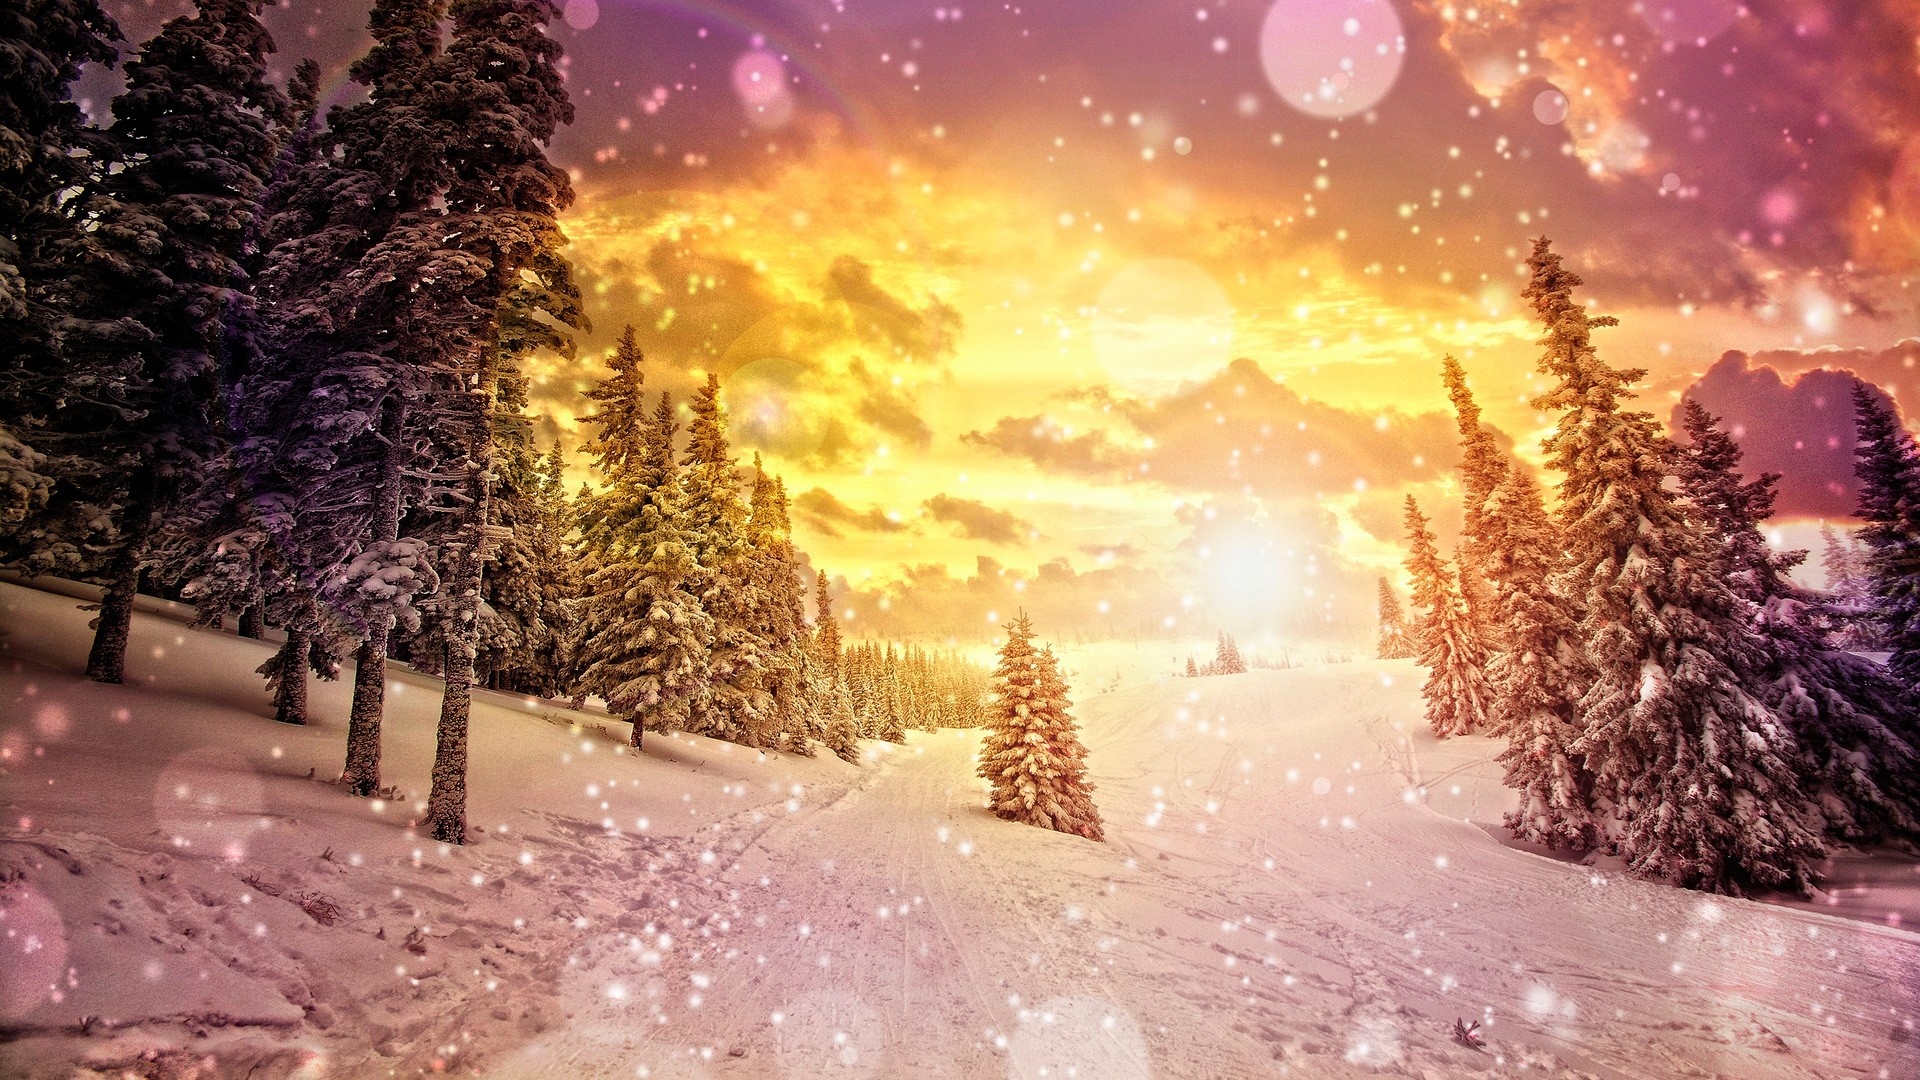 art, Artistic, Cg, Digital, Nature, Landscapes, Mountains, Winter, Snow